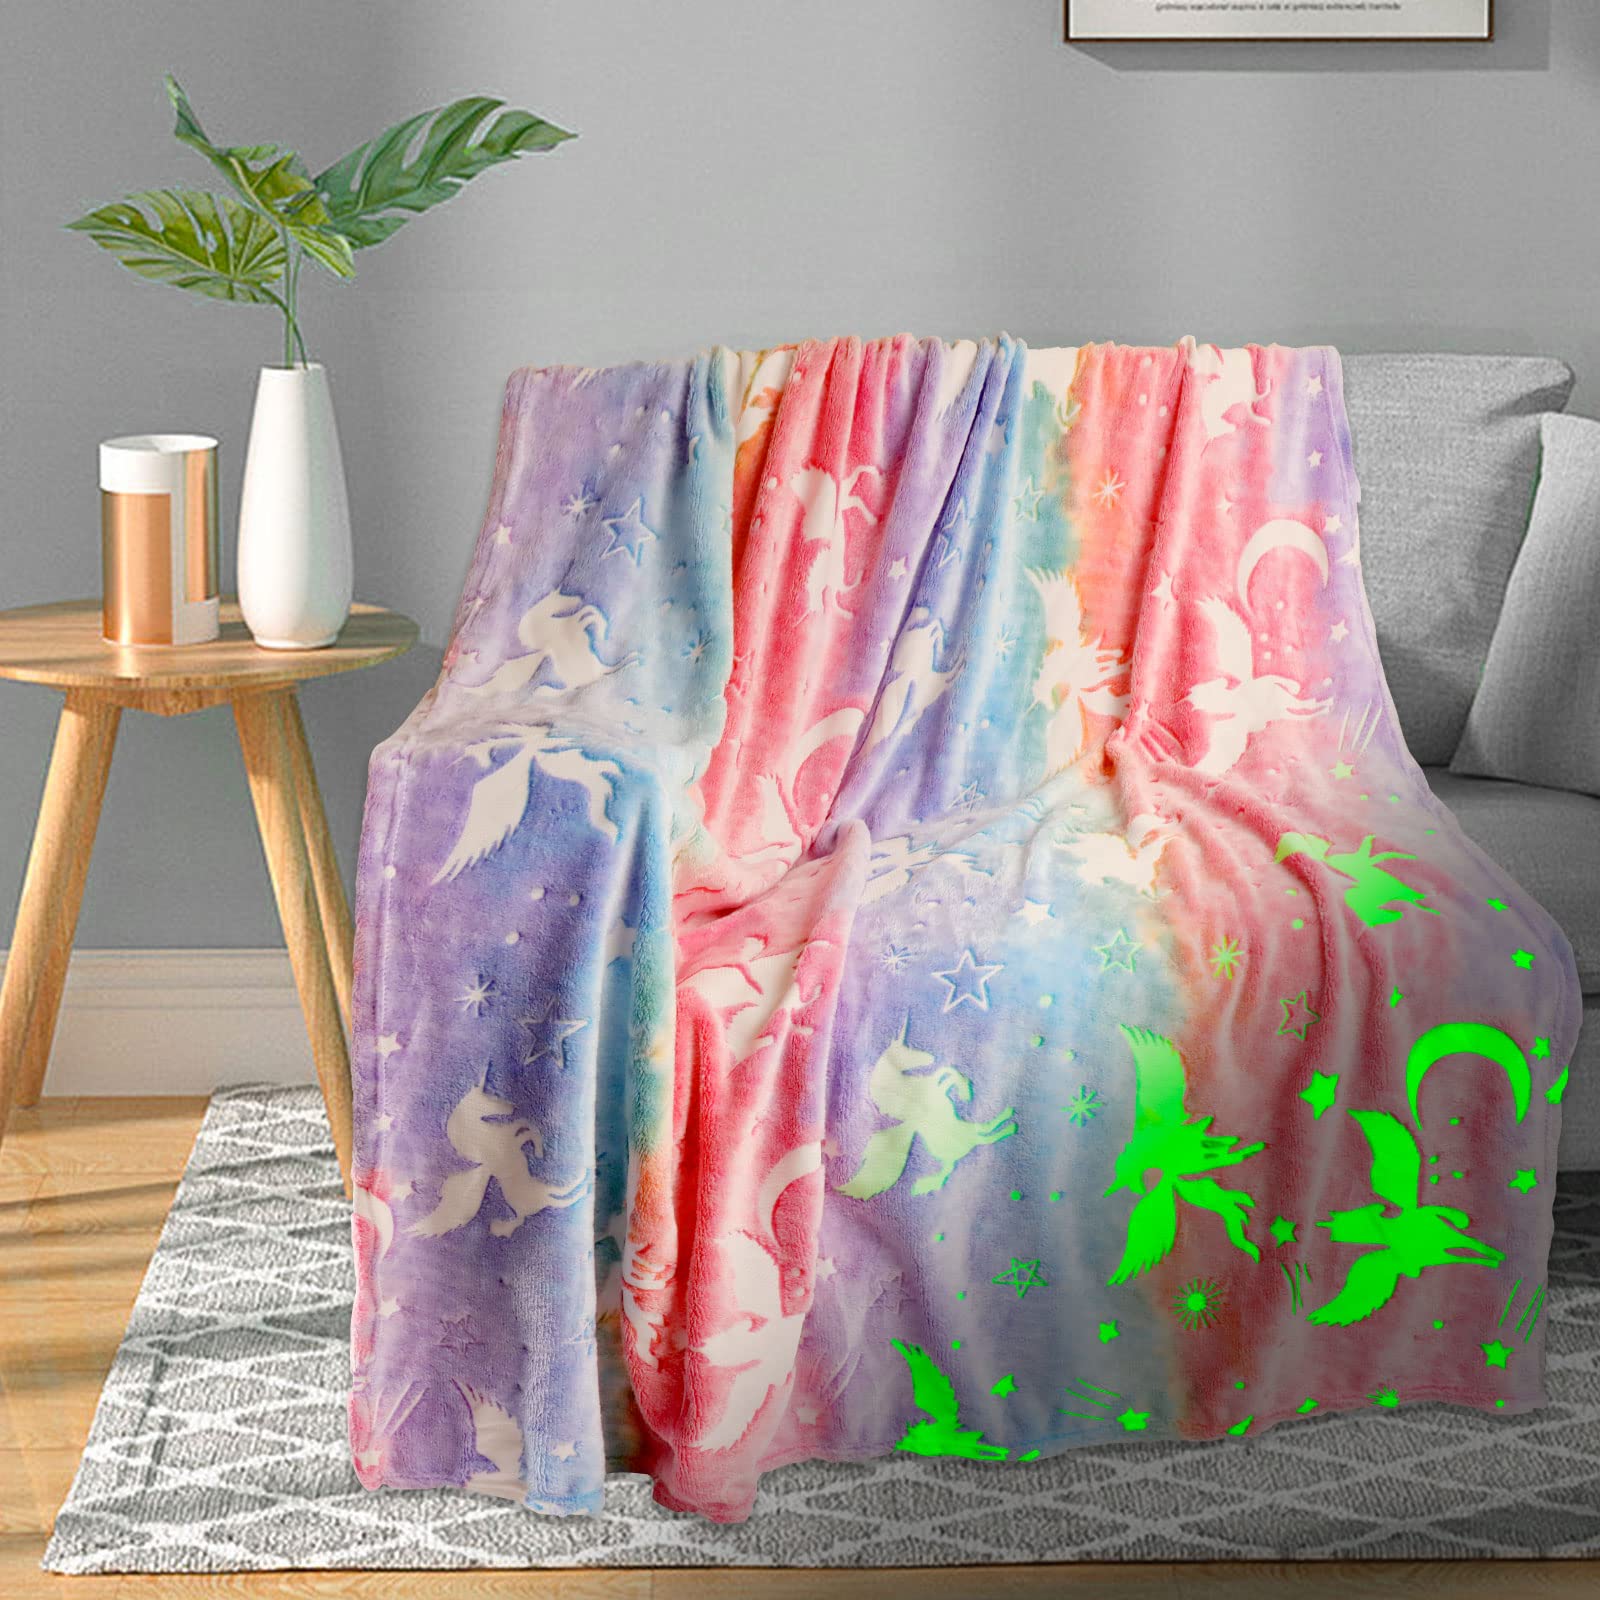 Unicorn Glow in The Dark Blanket for Kids - Rainbow Blankets for Girls